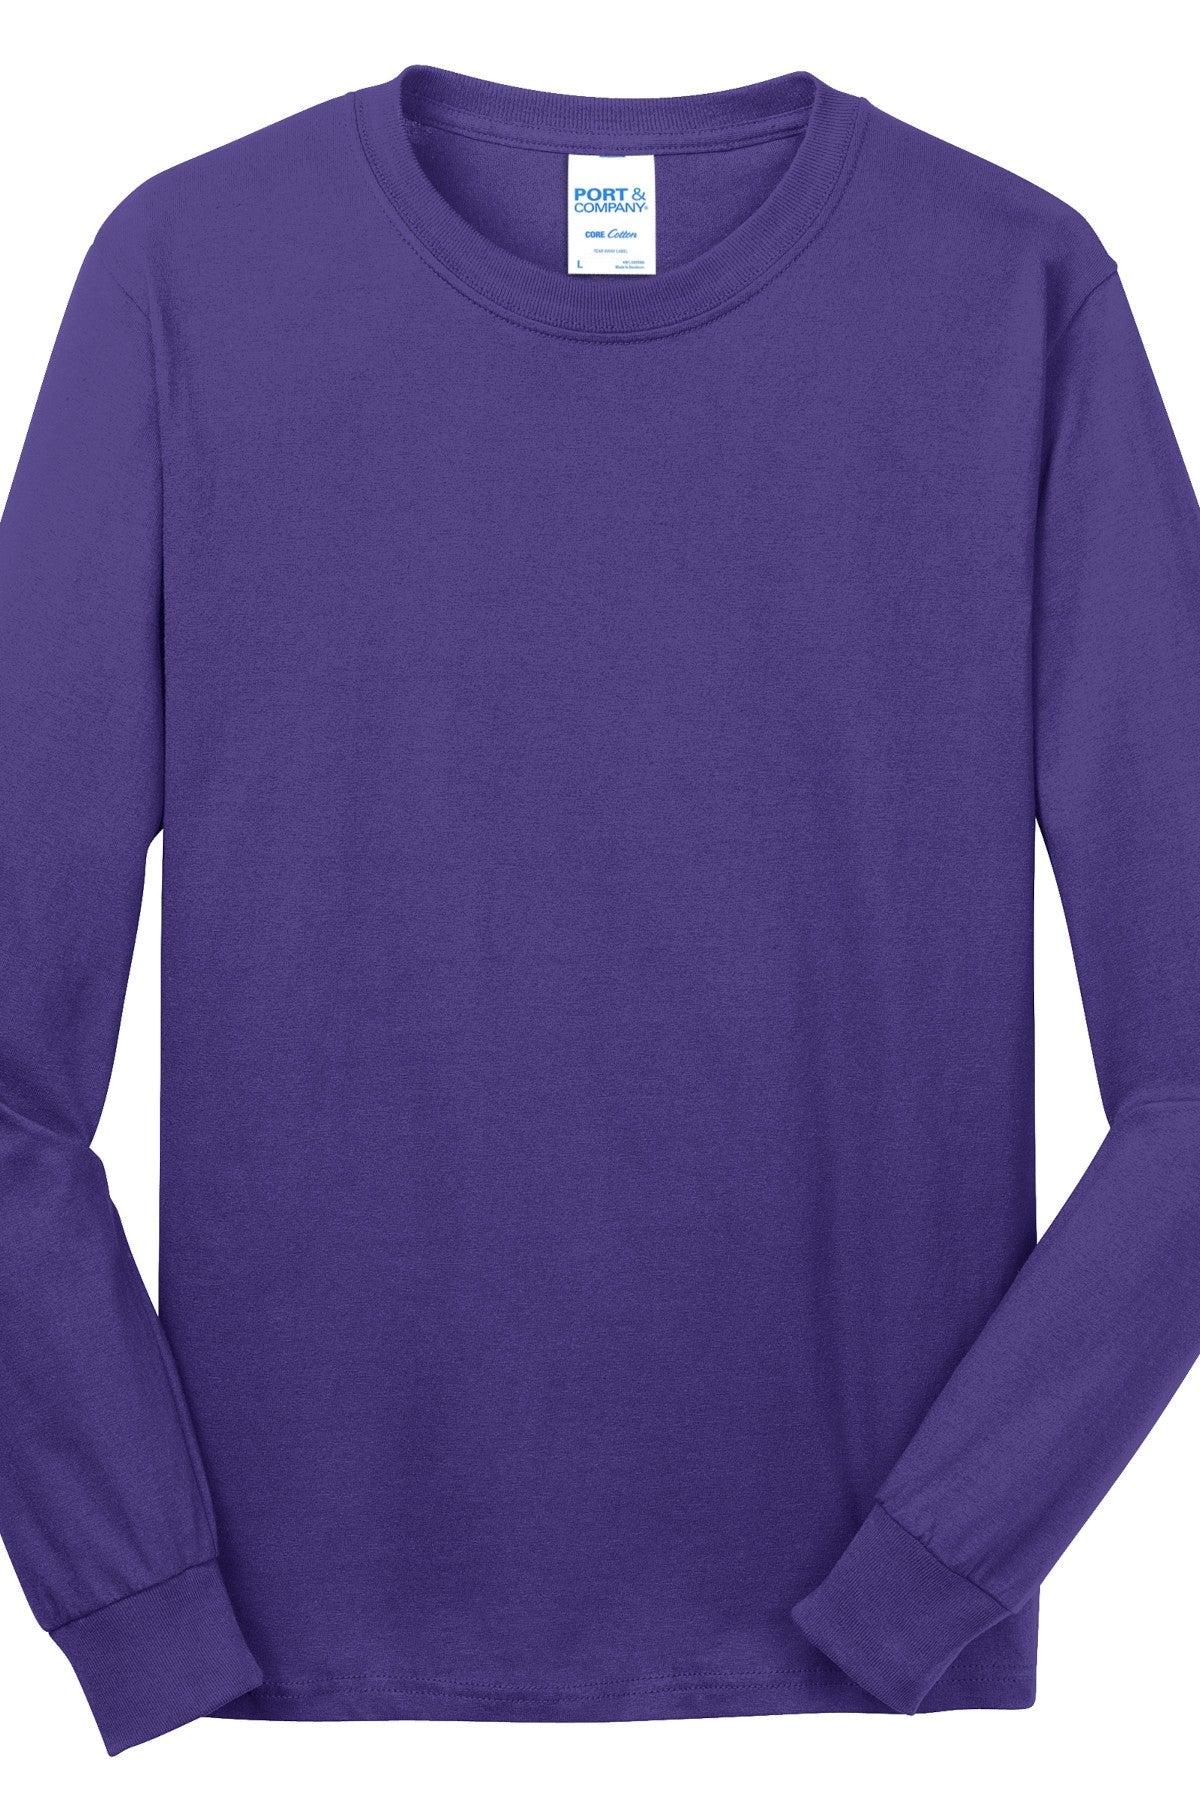 Port & Company® Pc54Ls Long Sleeve Cotton T-Shirt Ad Small / Purple